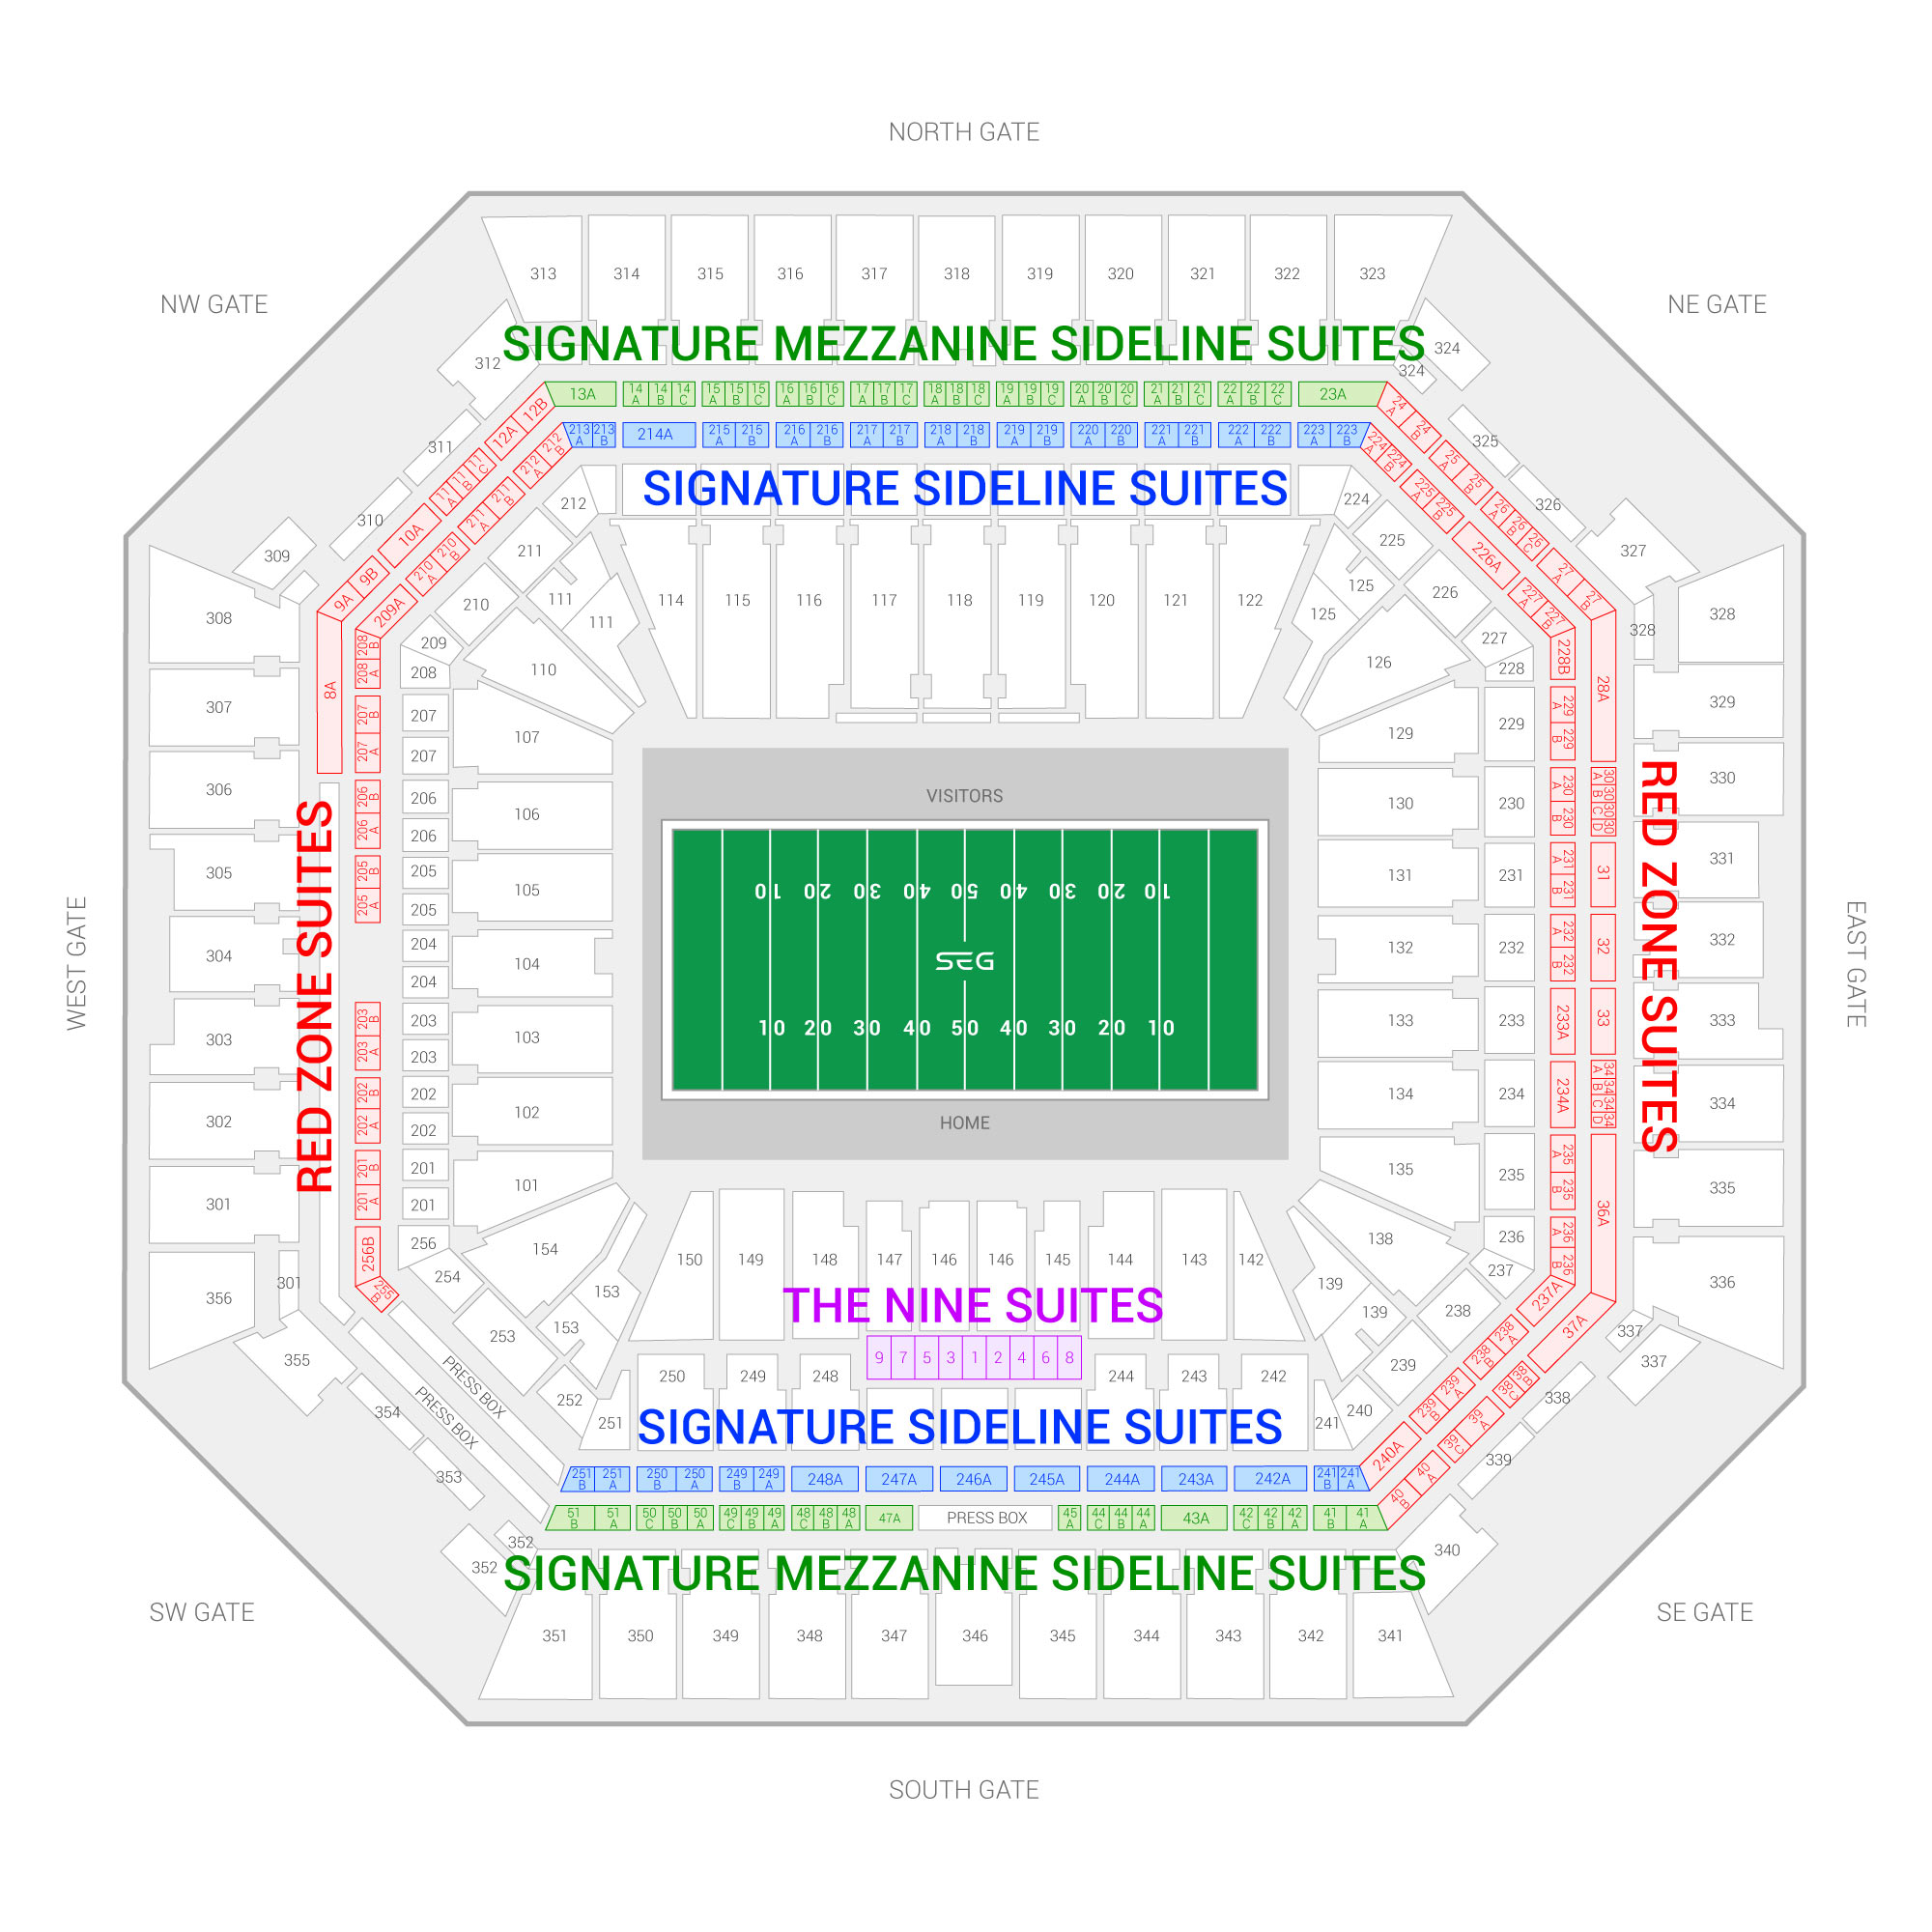 Hard Rock Stadium / Capital One Orange Bowl Suite Map and Seating Chart